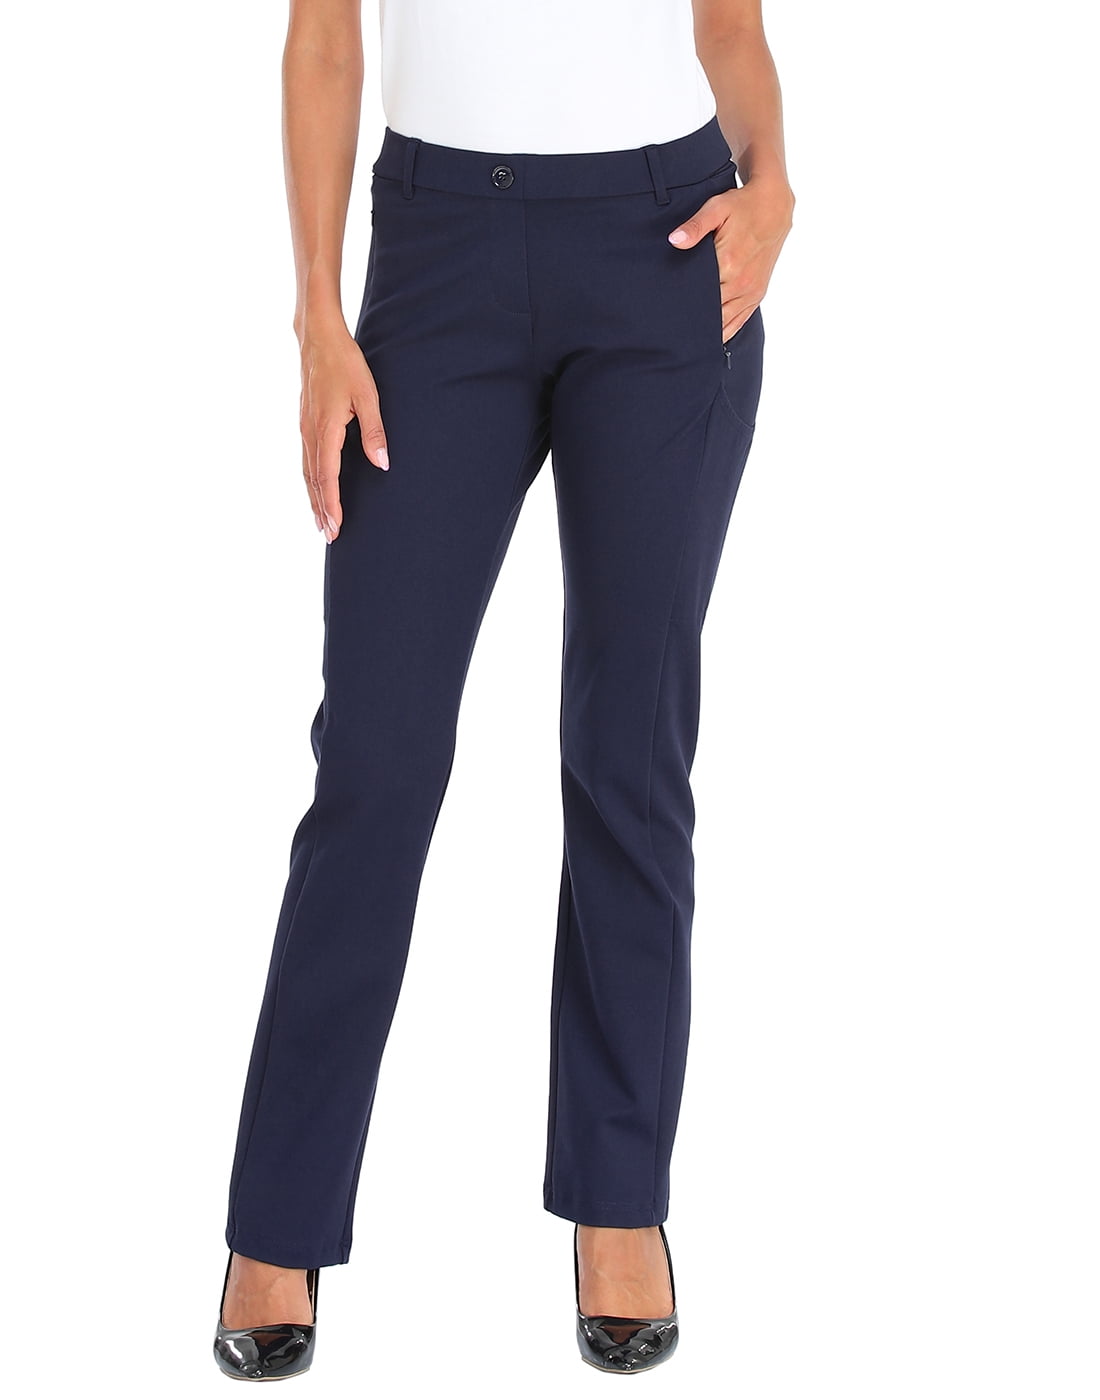 HDE Yoga Dress Pants for Women Straight Leg Pull On Pants with 8 Pockets  Navy Blue - XL Regular